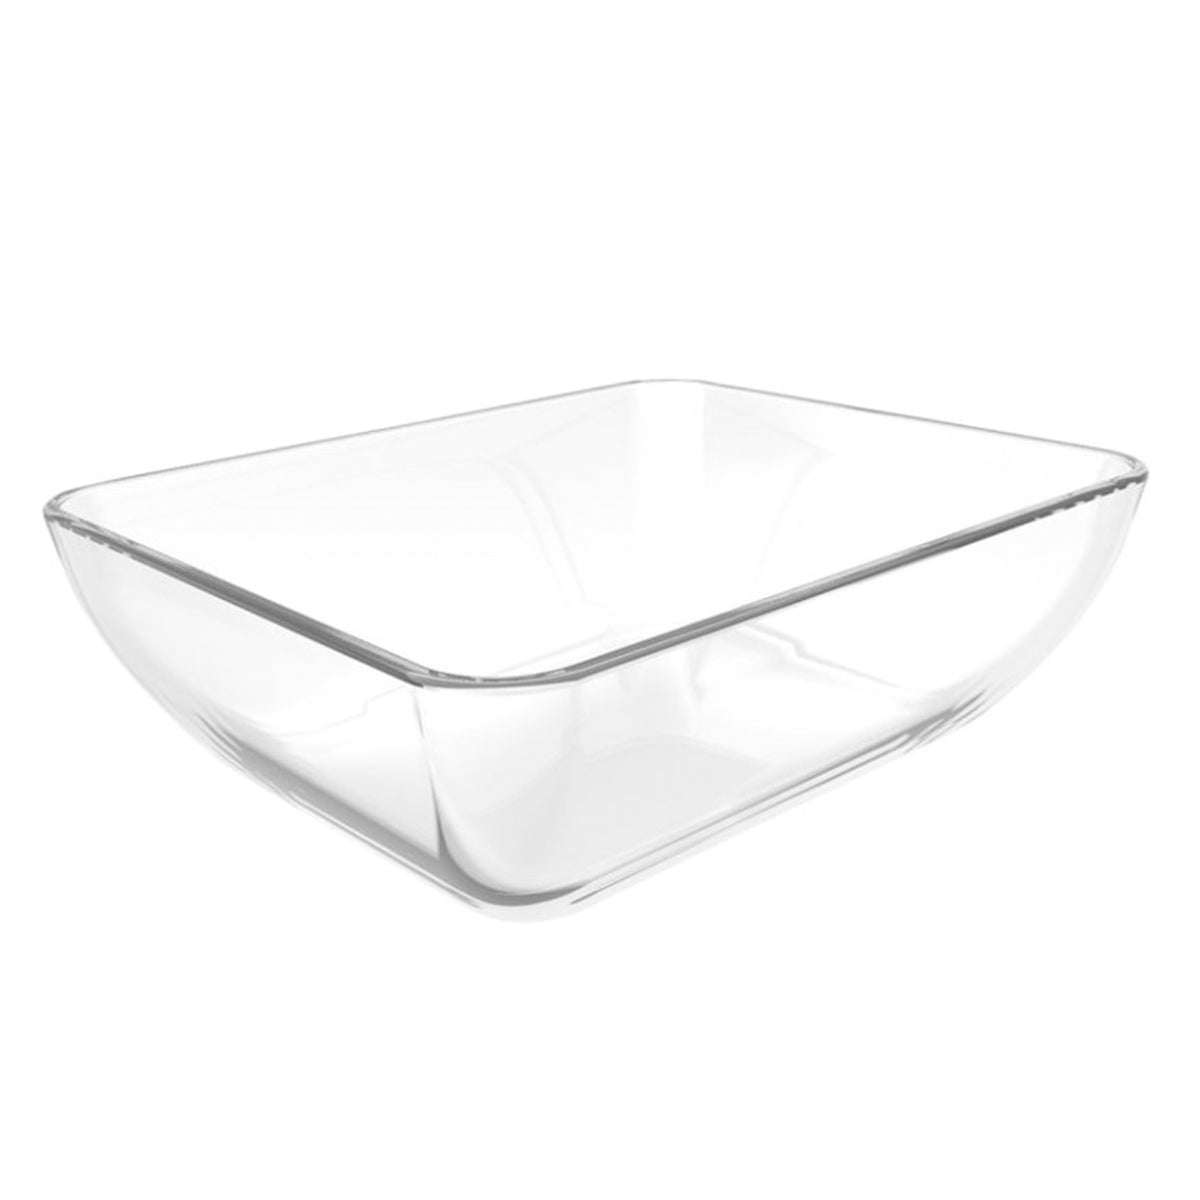 Rectangular glass dish with lid